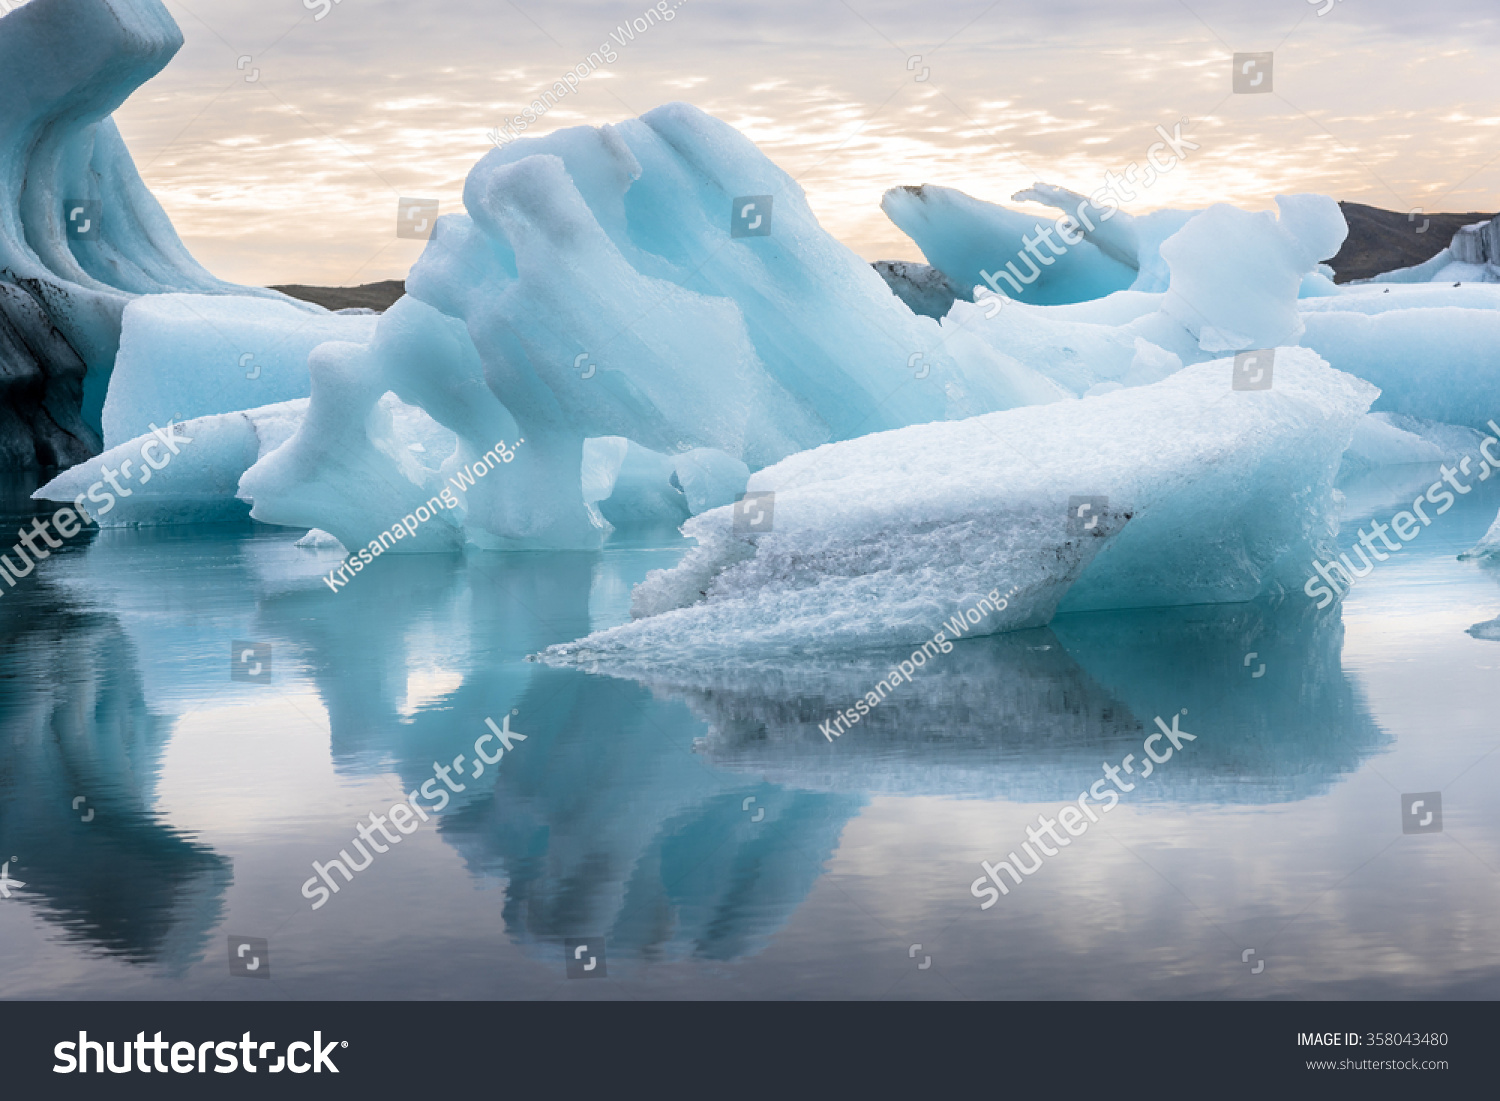 Jokulsarlon Glacial Lake Iceland Stock Photo 358043480 | Shutterstock